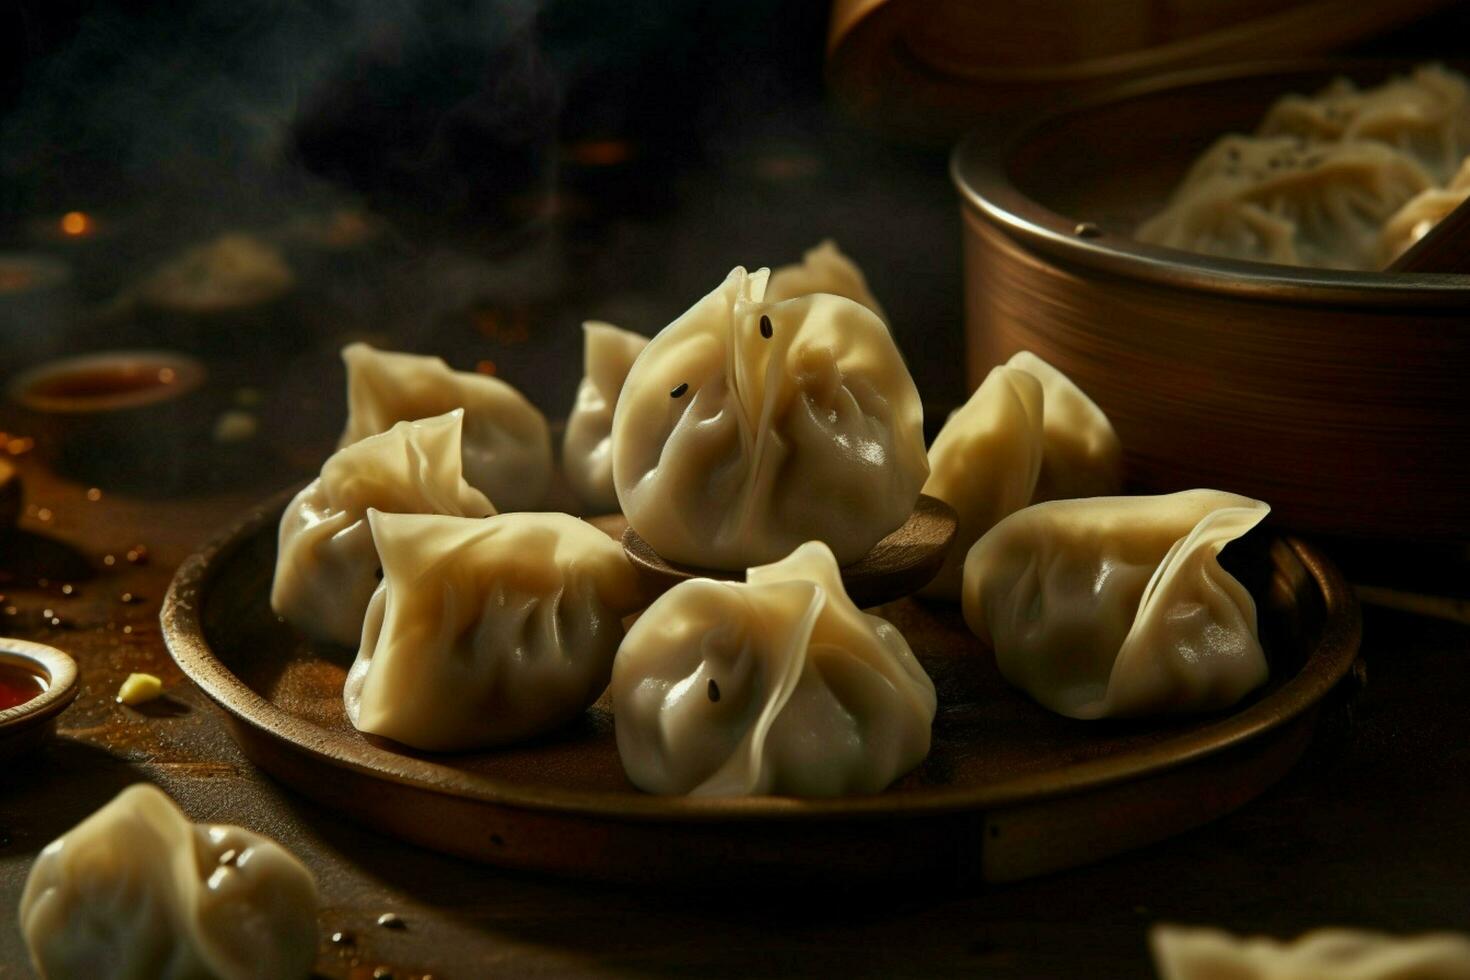 dumplings image hd photo